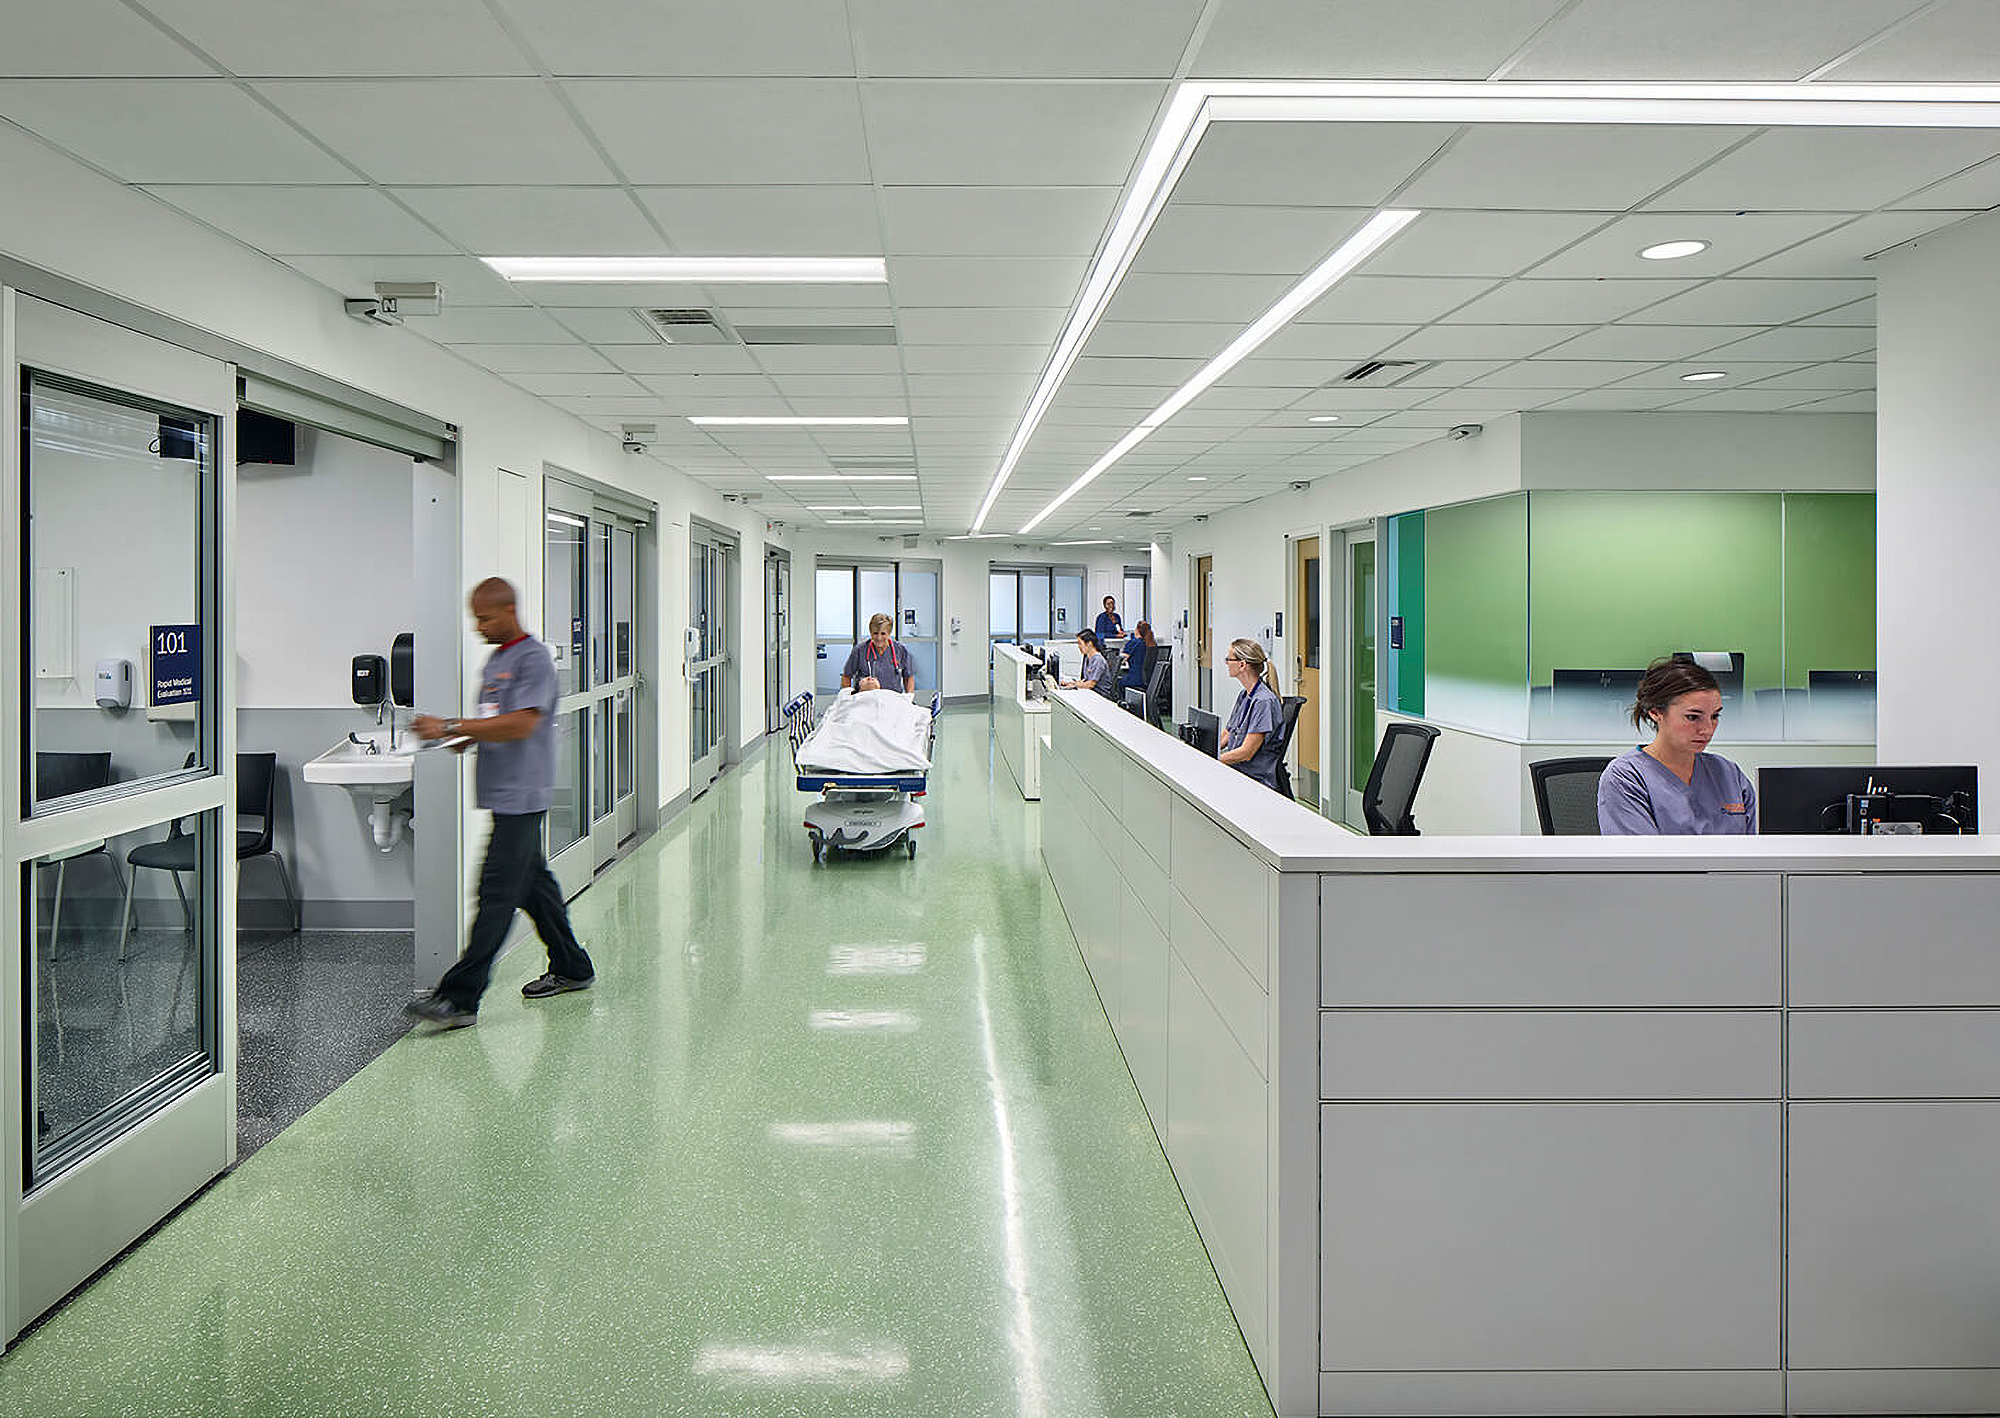 Interior hospital corridor